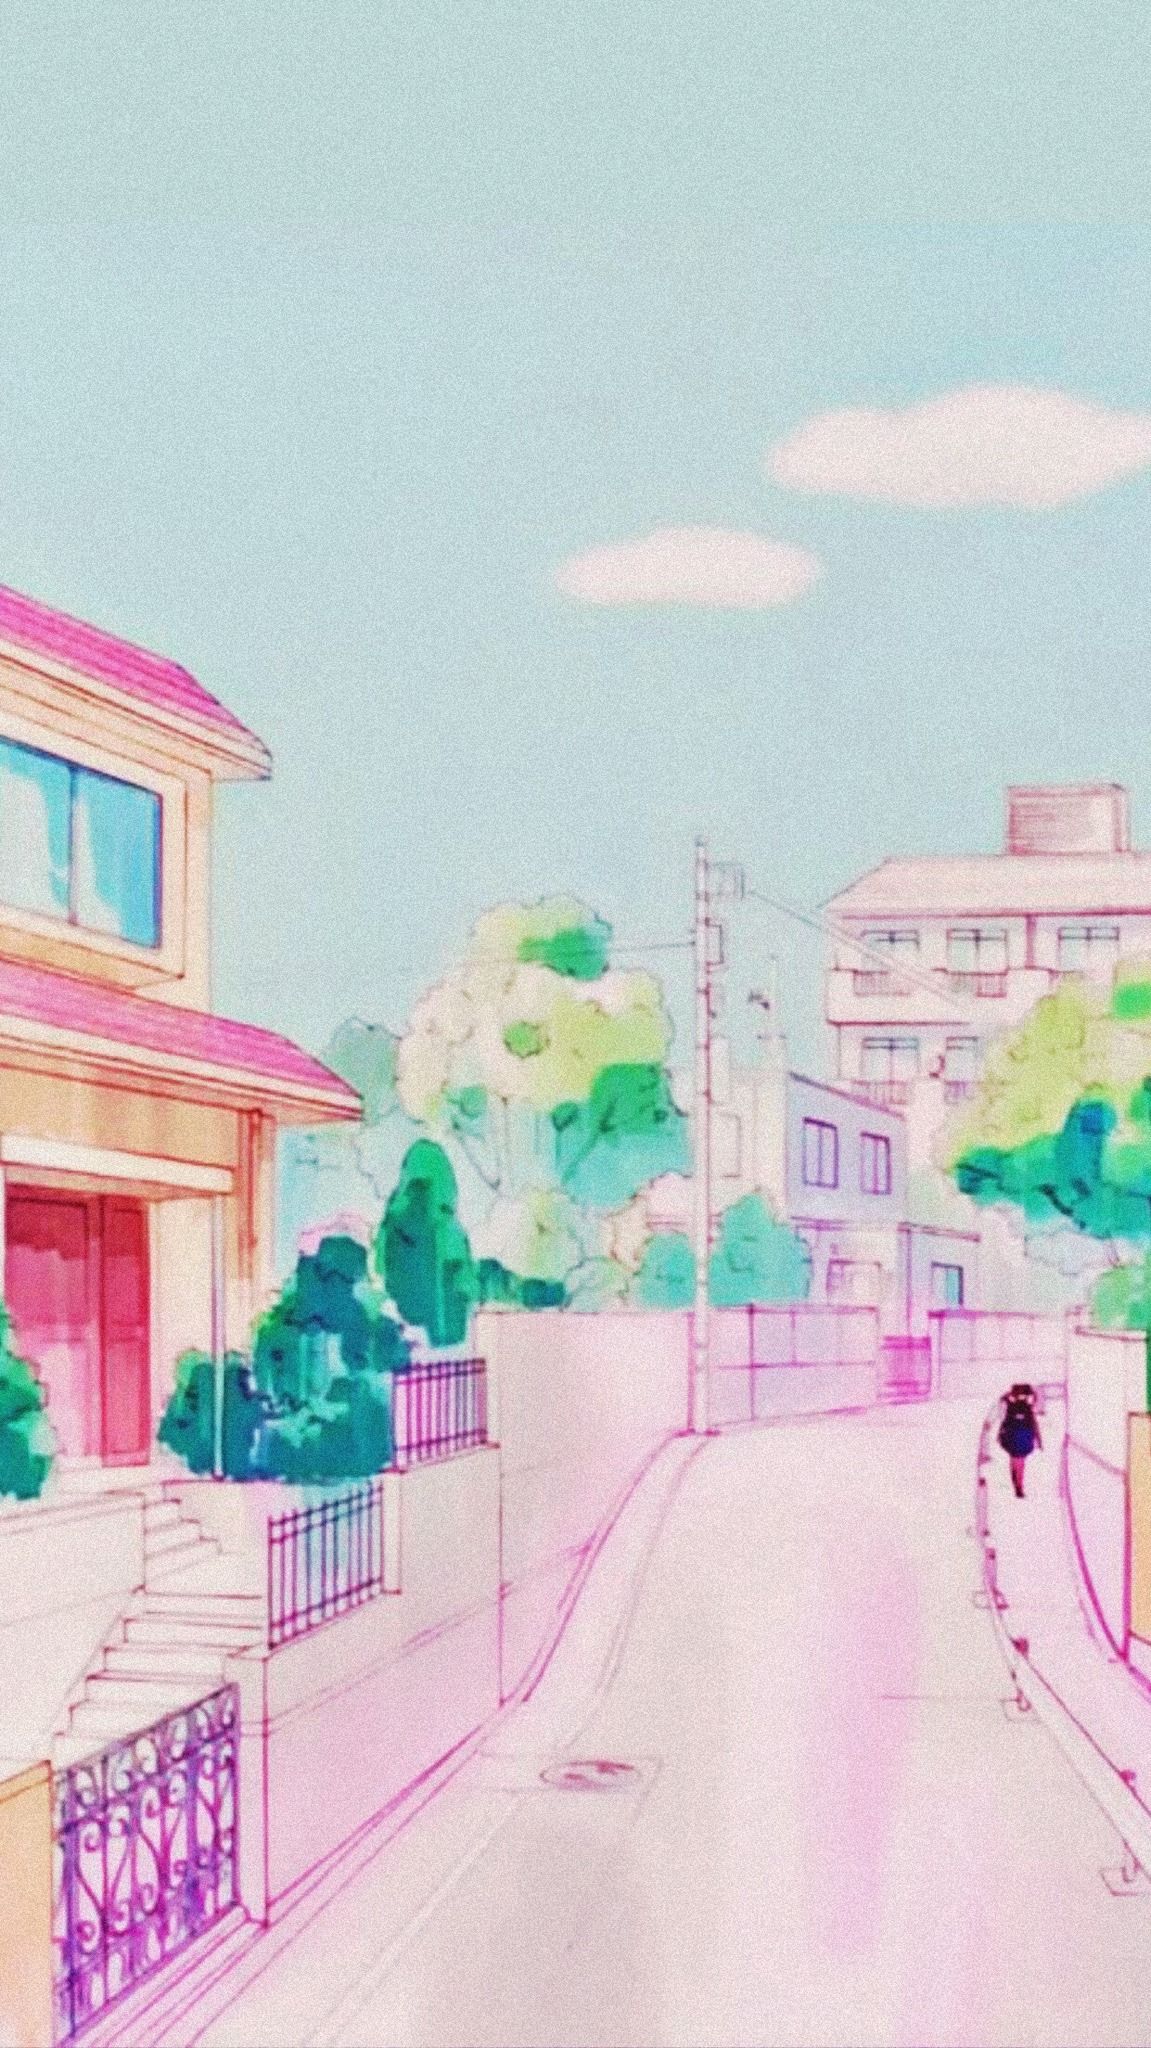 90s anime aesthetic. Aesthetic anime, Anime wallpaper, Anime scenery